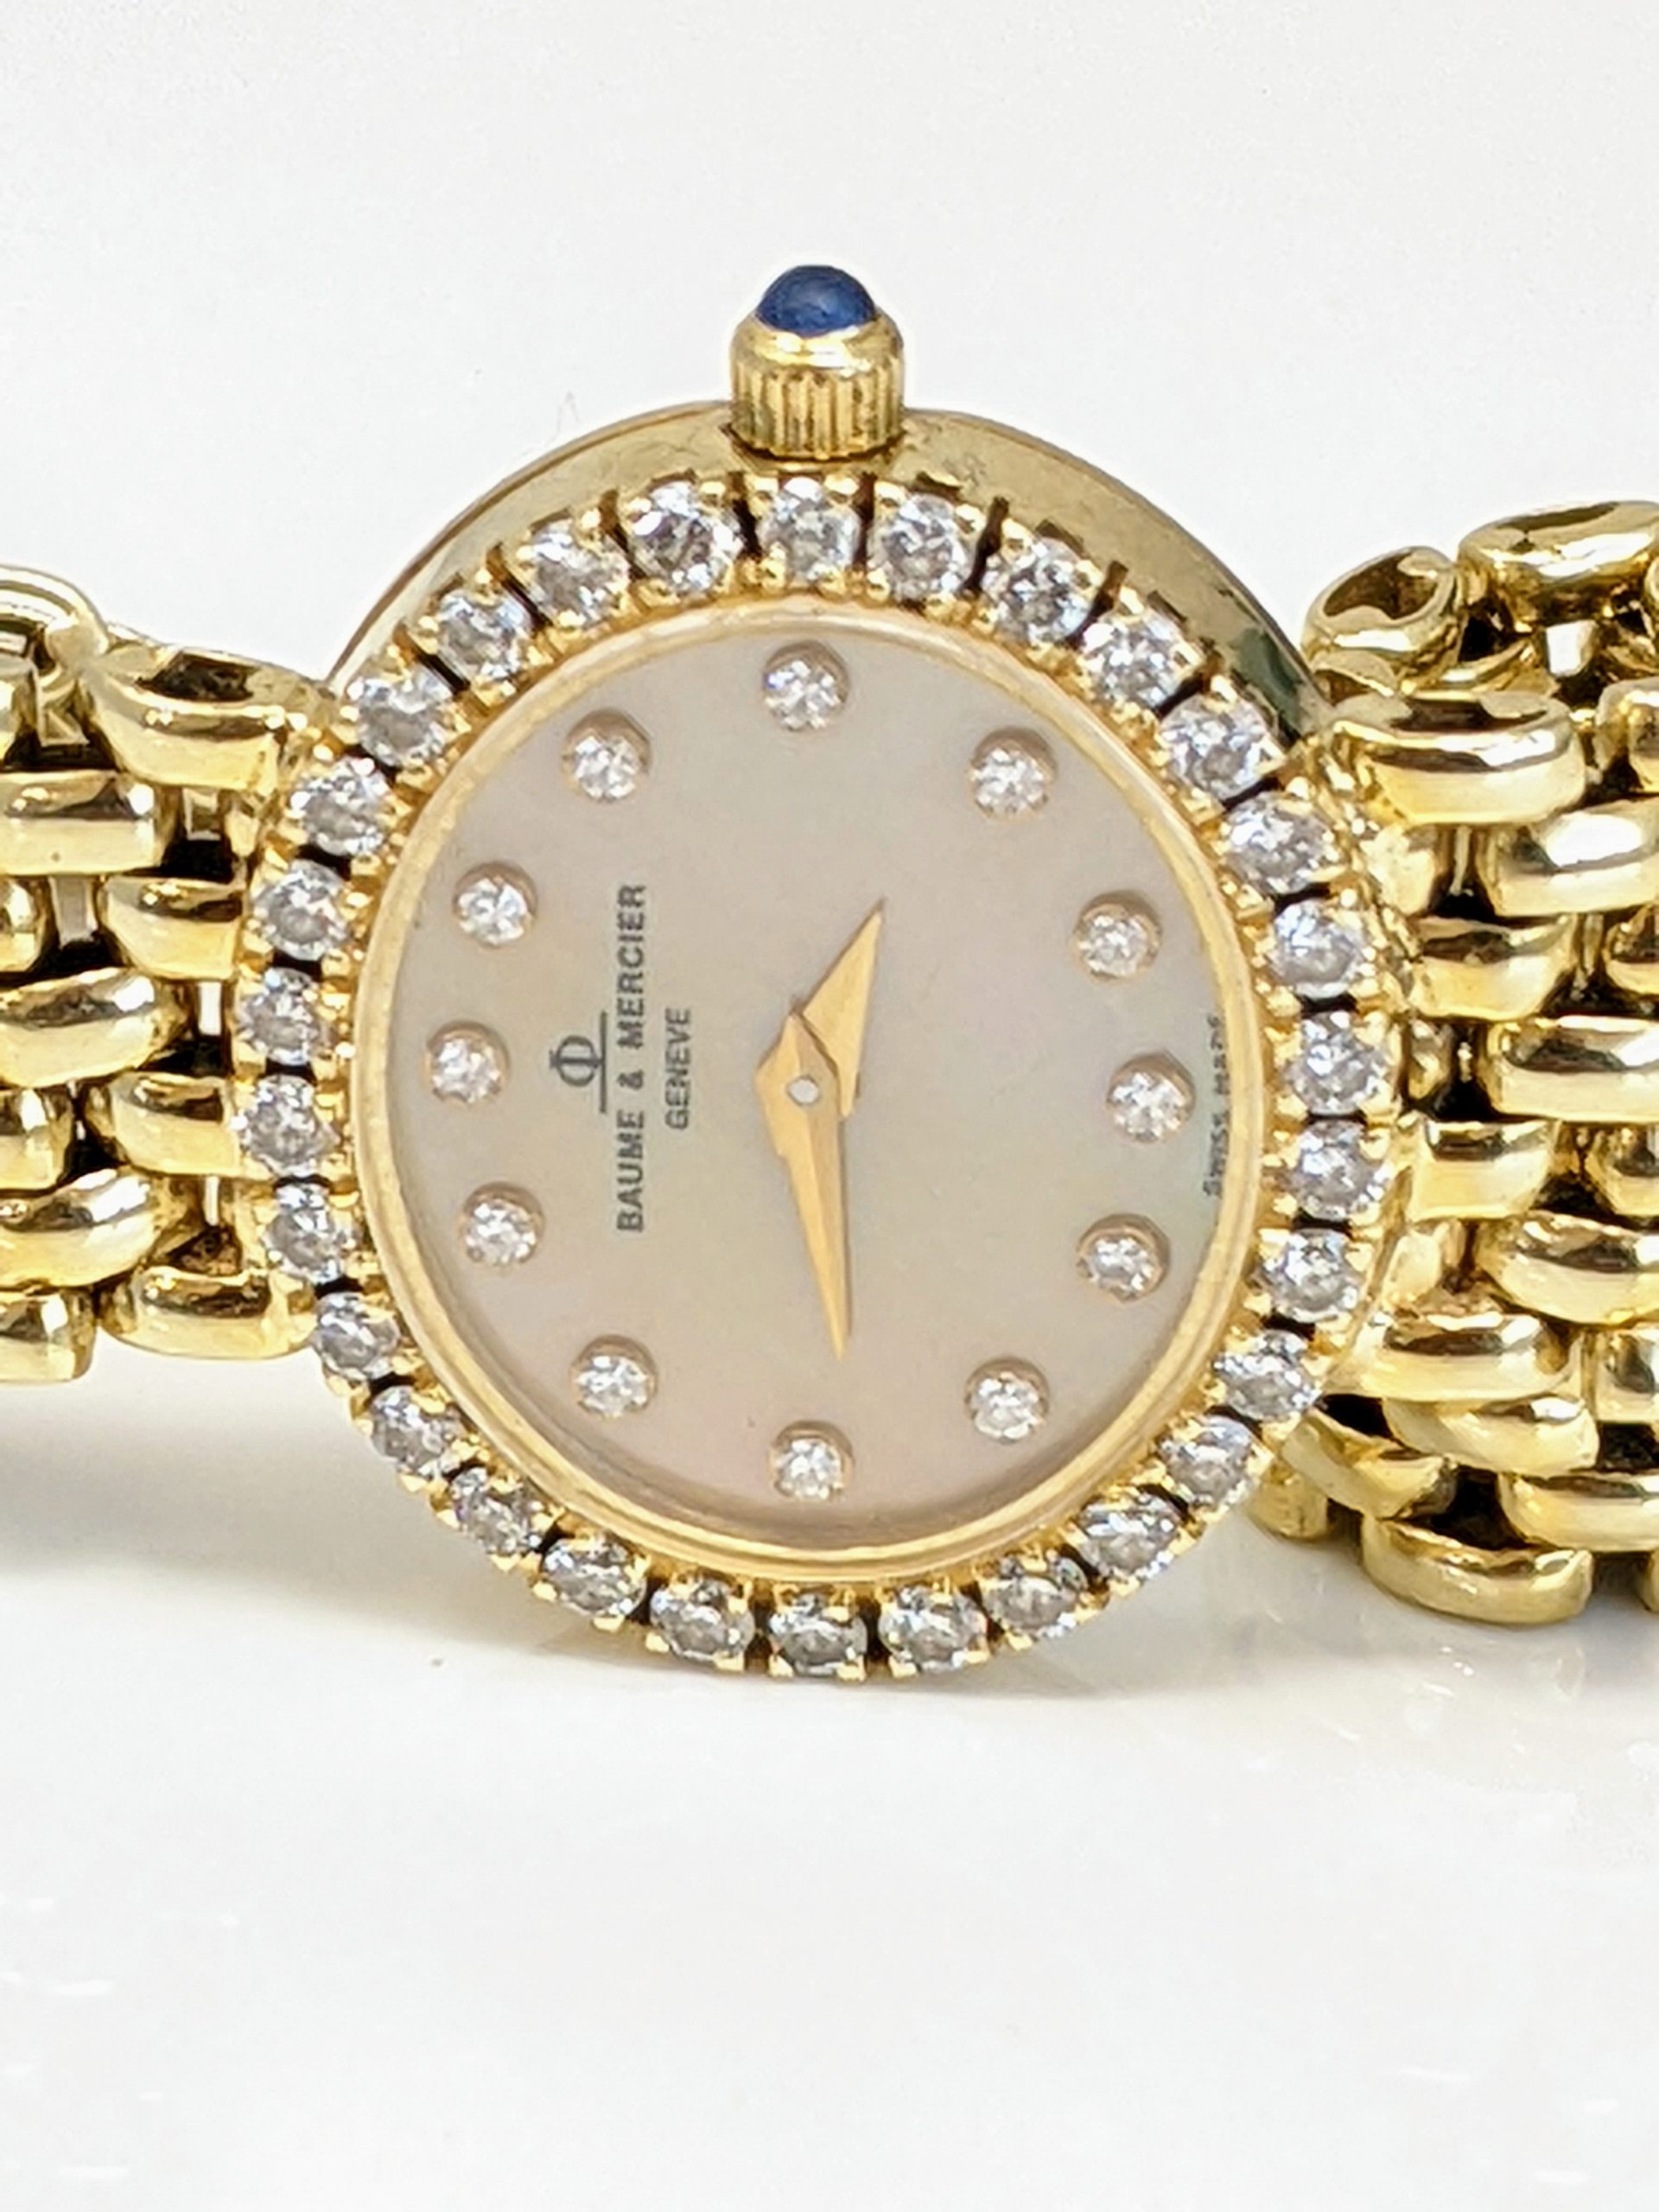 https://www.jewelrynloan.com/blog/baume-mercier-gold-and-diamond-ladies-watch